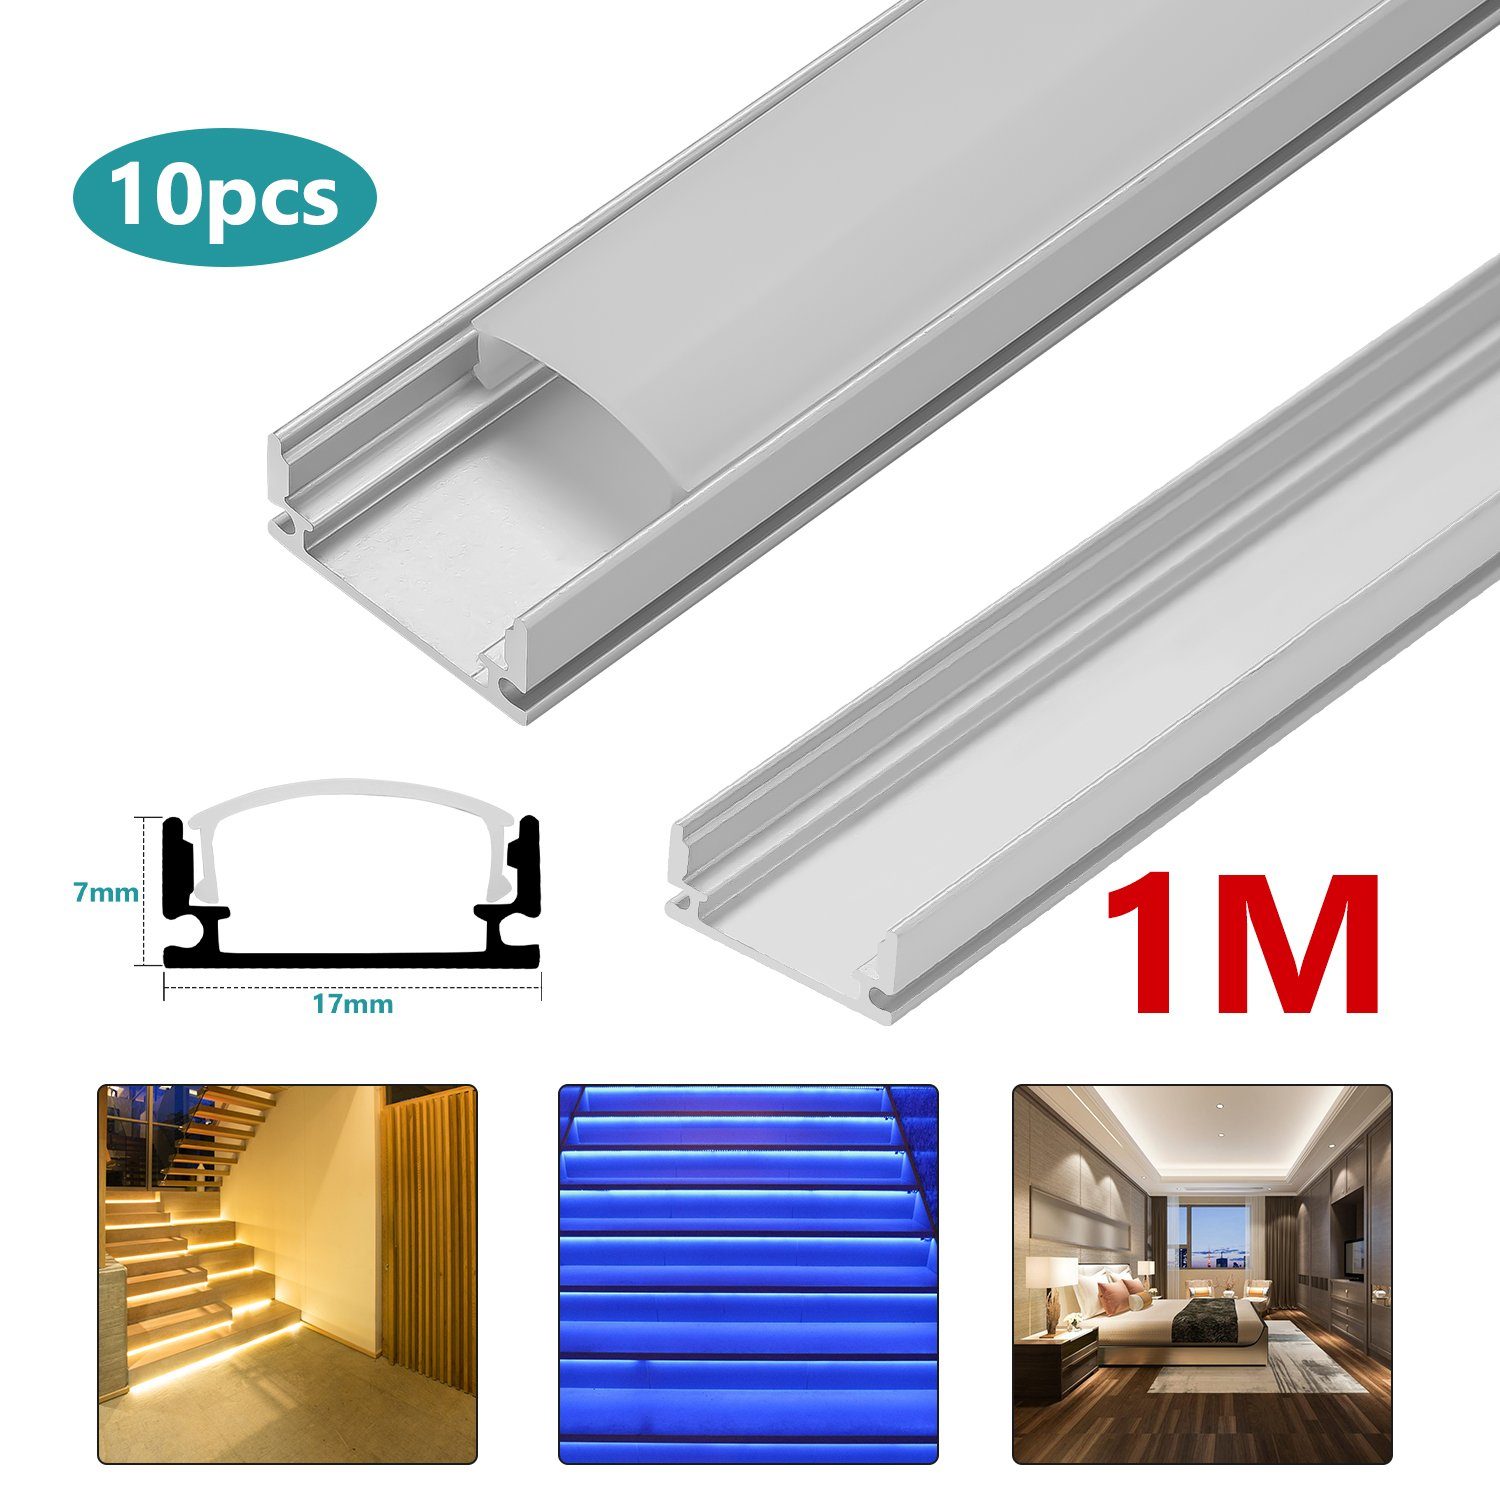 Clanmacy LED-Stripe-Profil 10x Aluminium 1m LED Leiste Profil Schiene